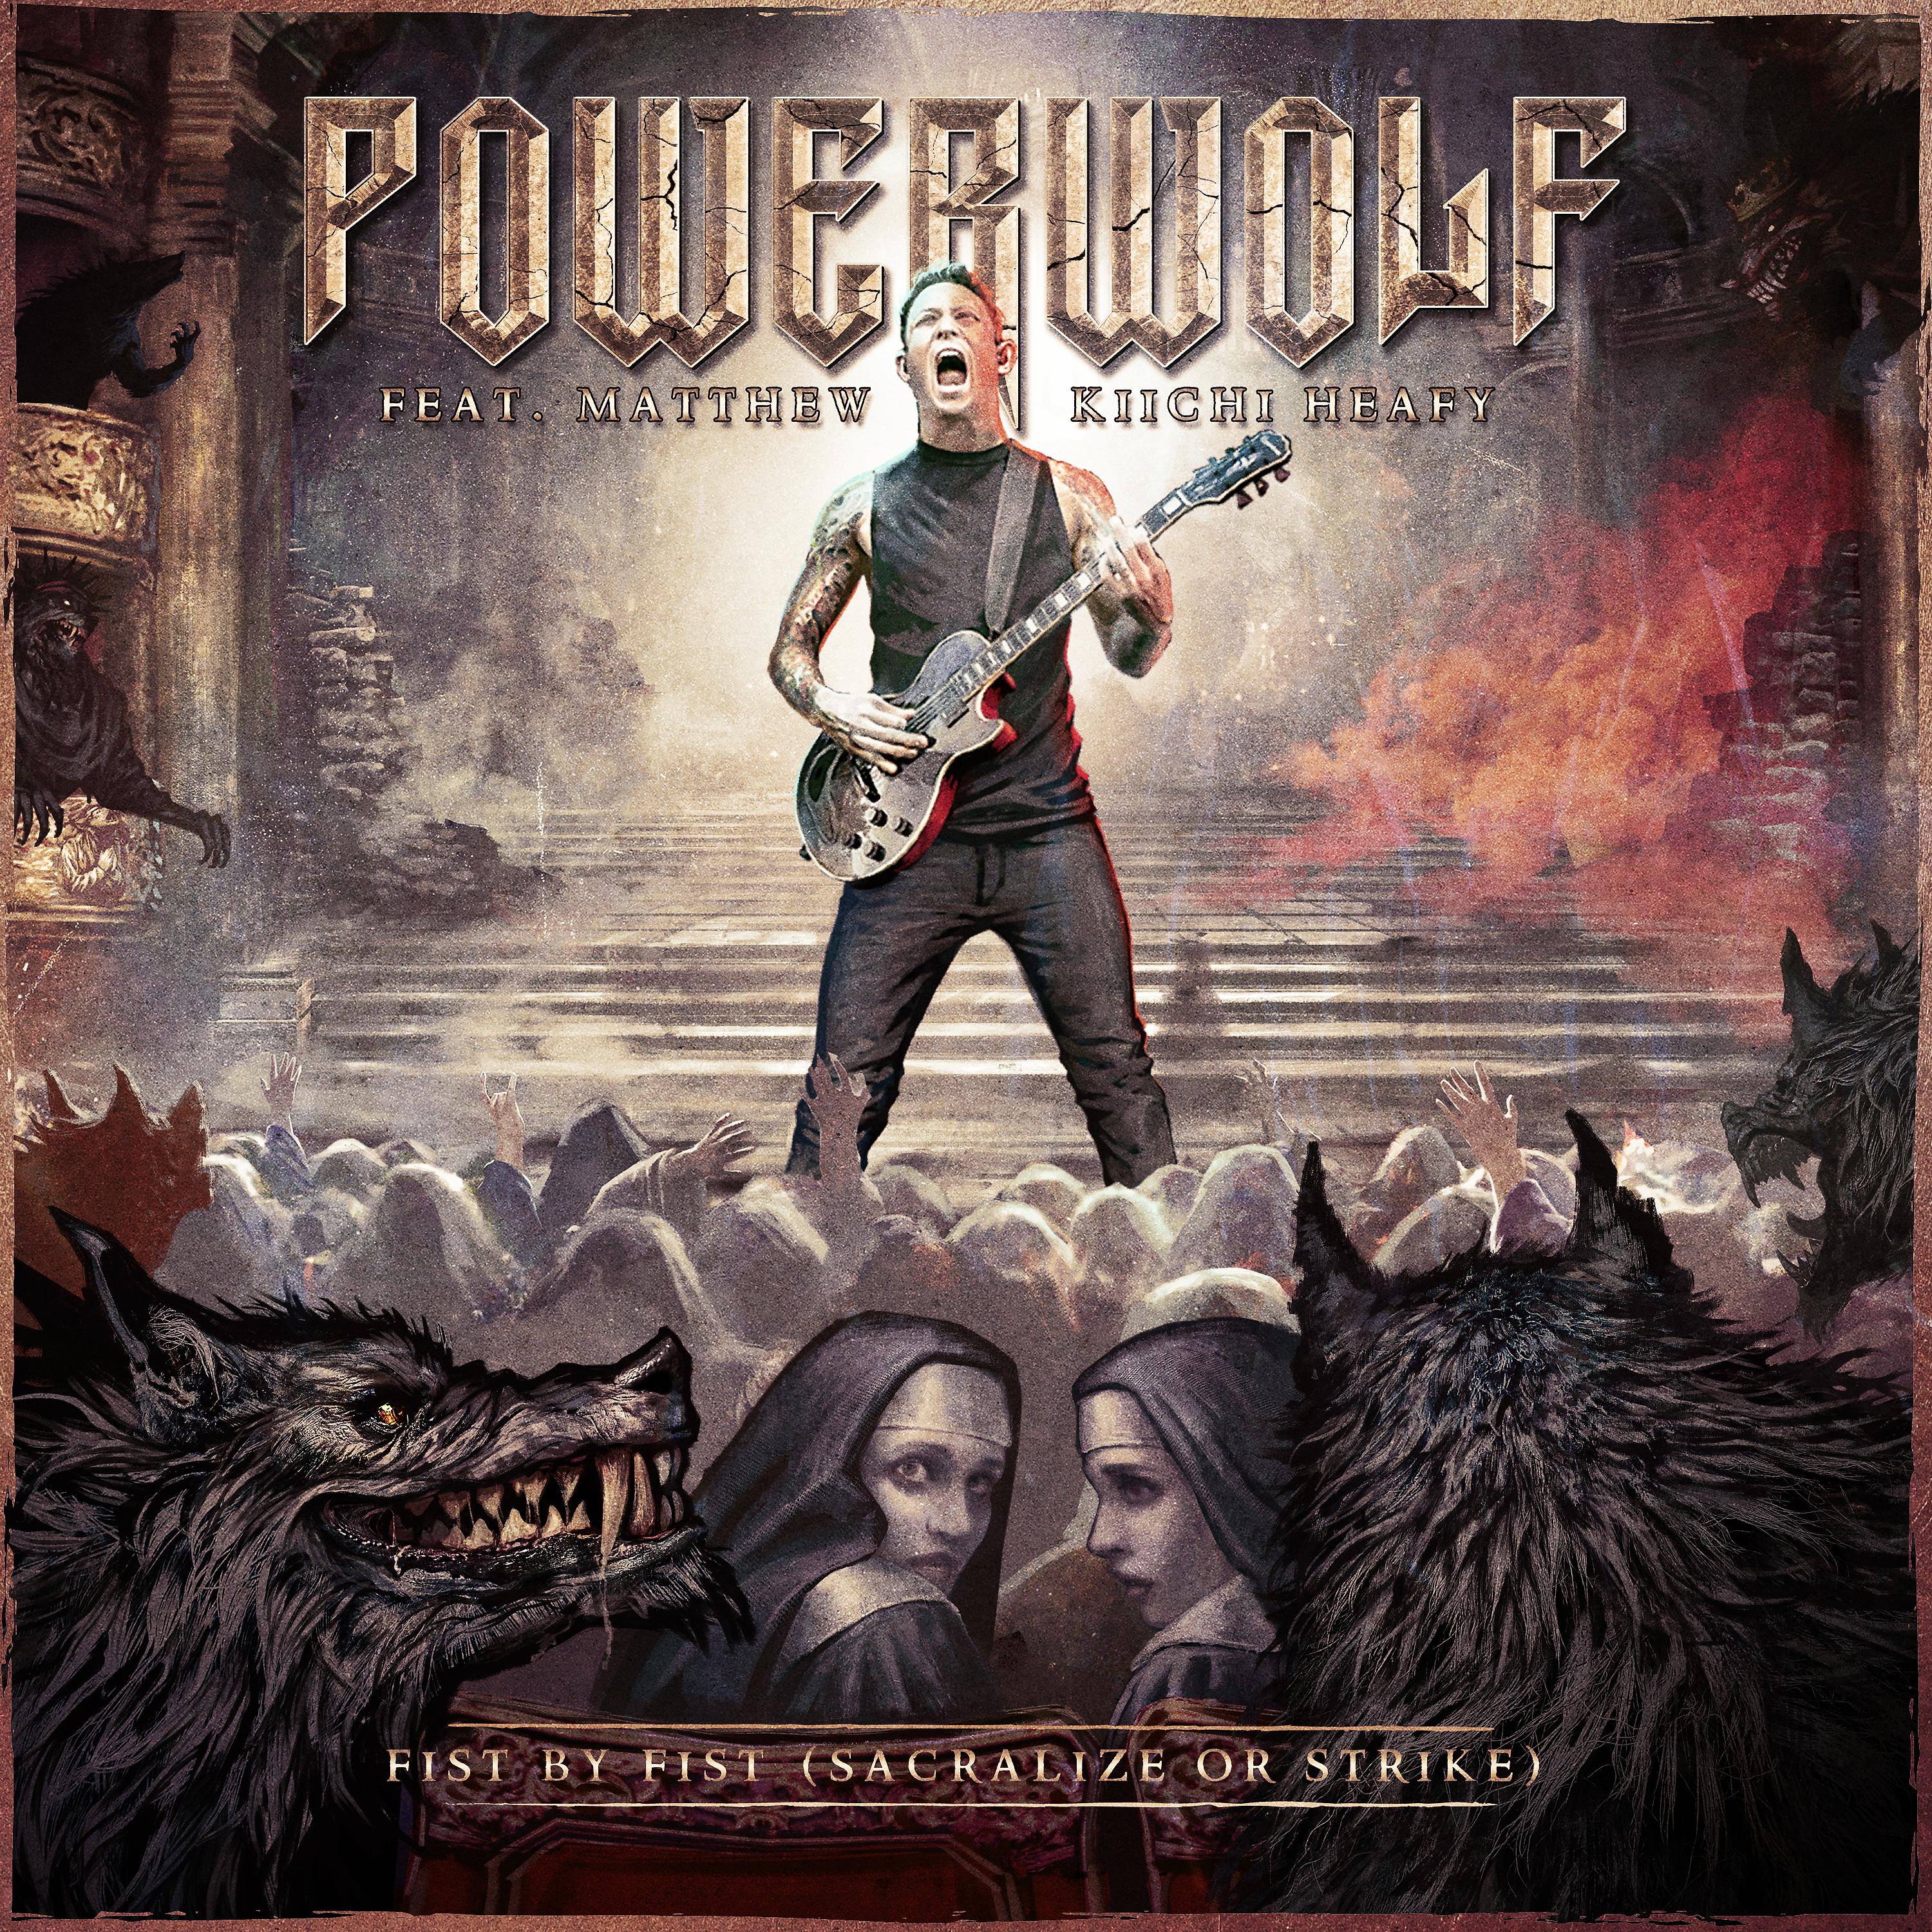 Альбом Dancing with the Dead - Powerwolf - слушать все треки онлайн на